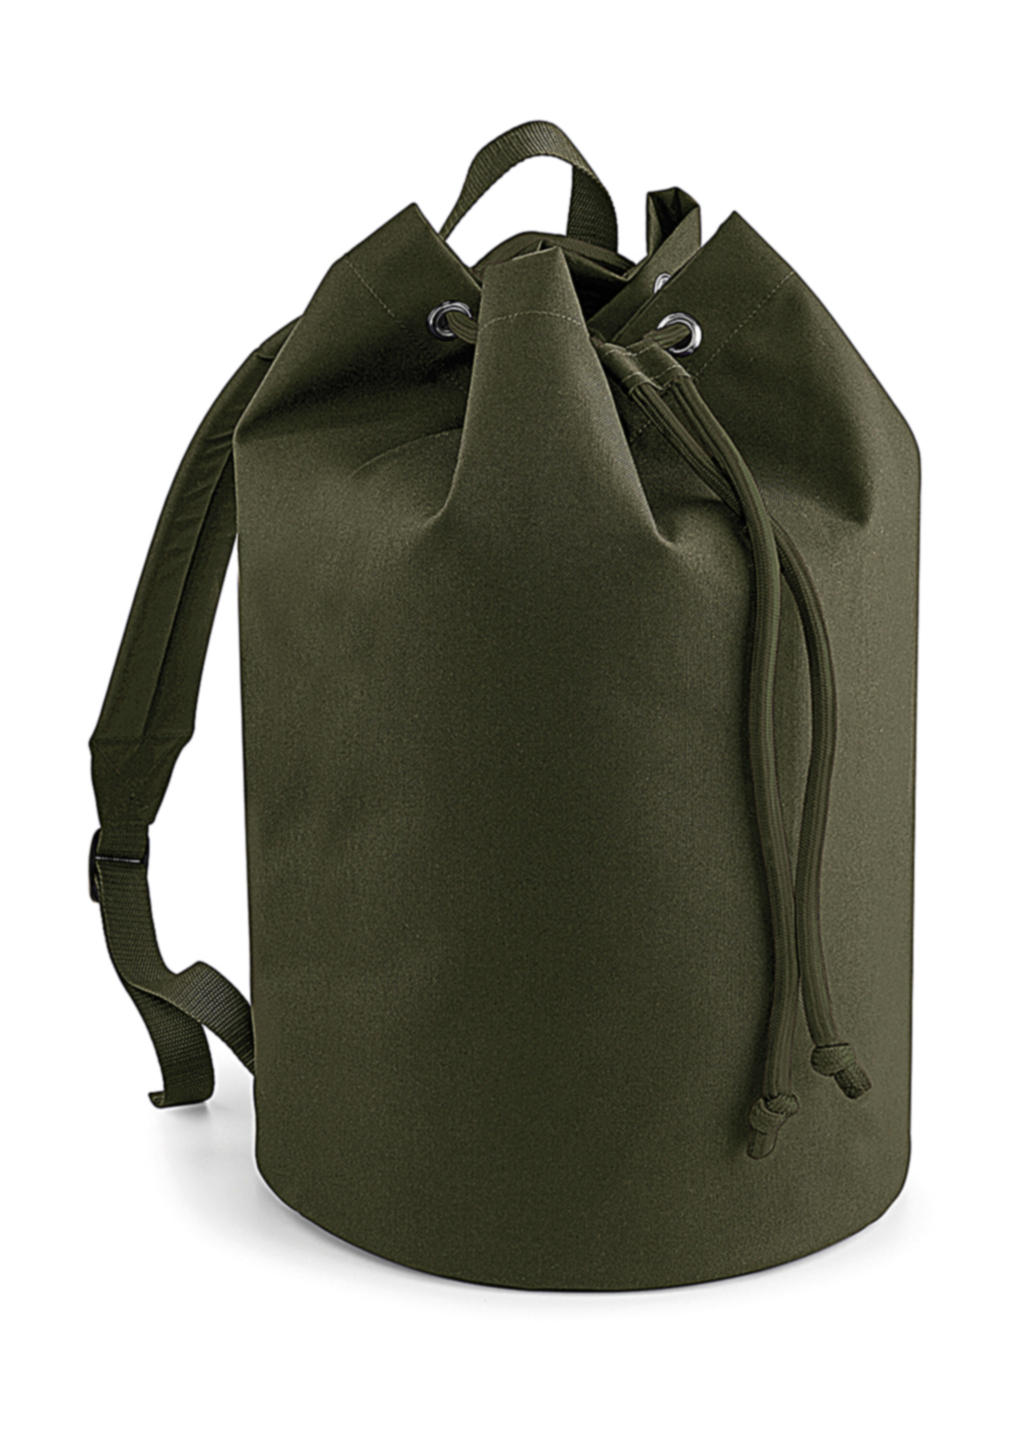  Original Drawstring Backpack in Farbe Military Green